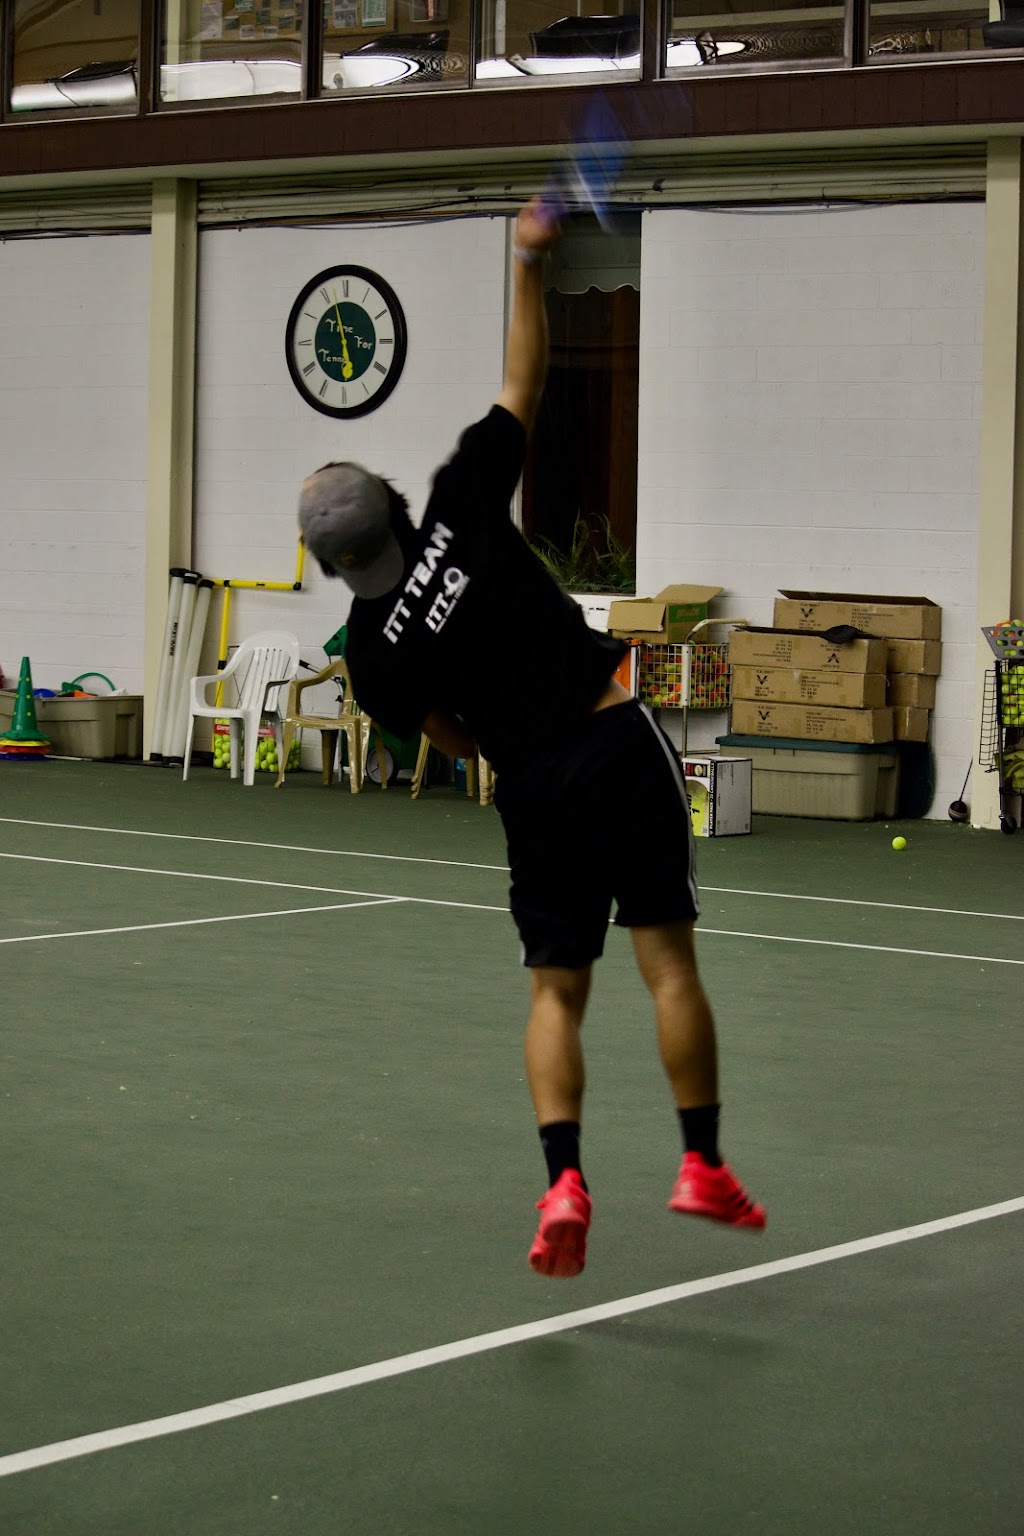 Ismail Tennis Training | 132 Timber Ridge Dr, Elyria, OH 44035, USA | Phone: (970) 363-4687